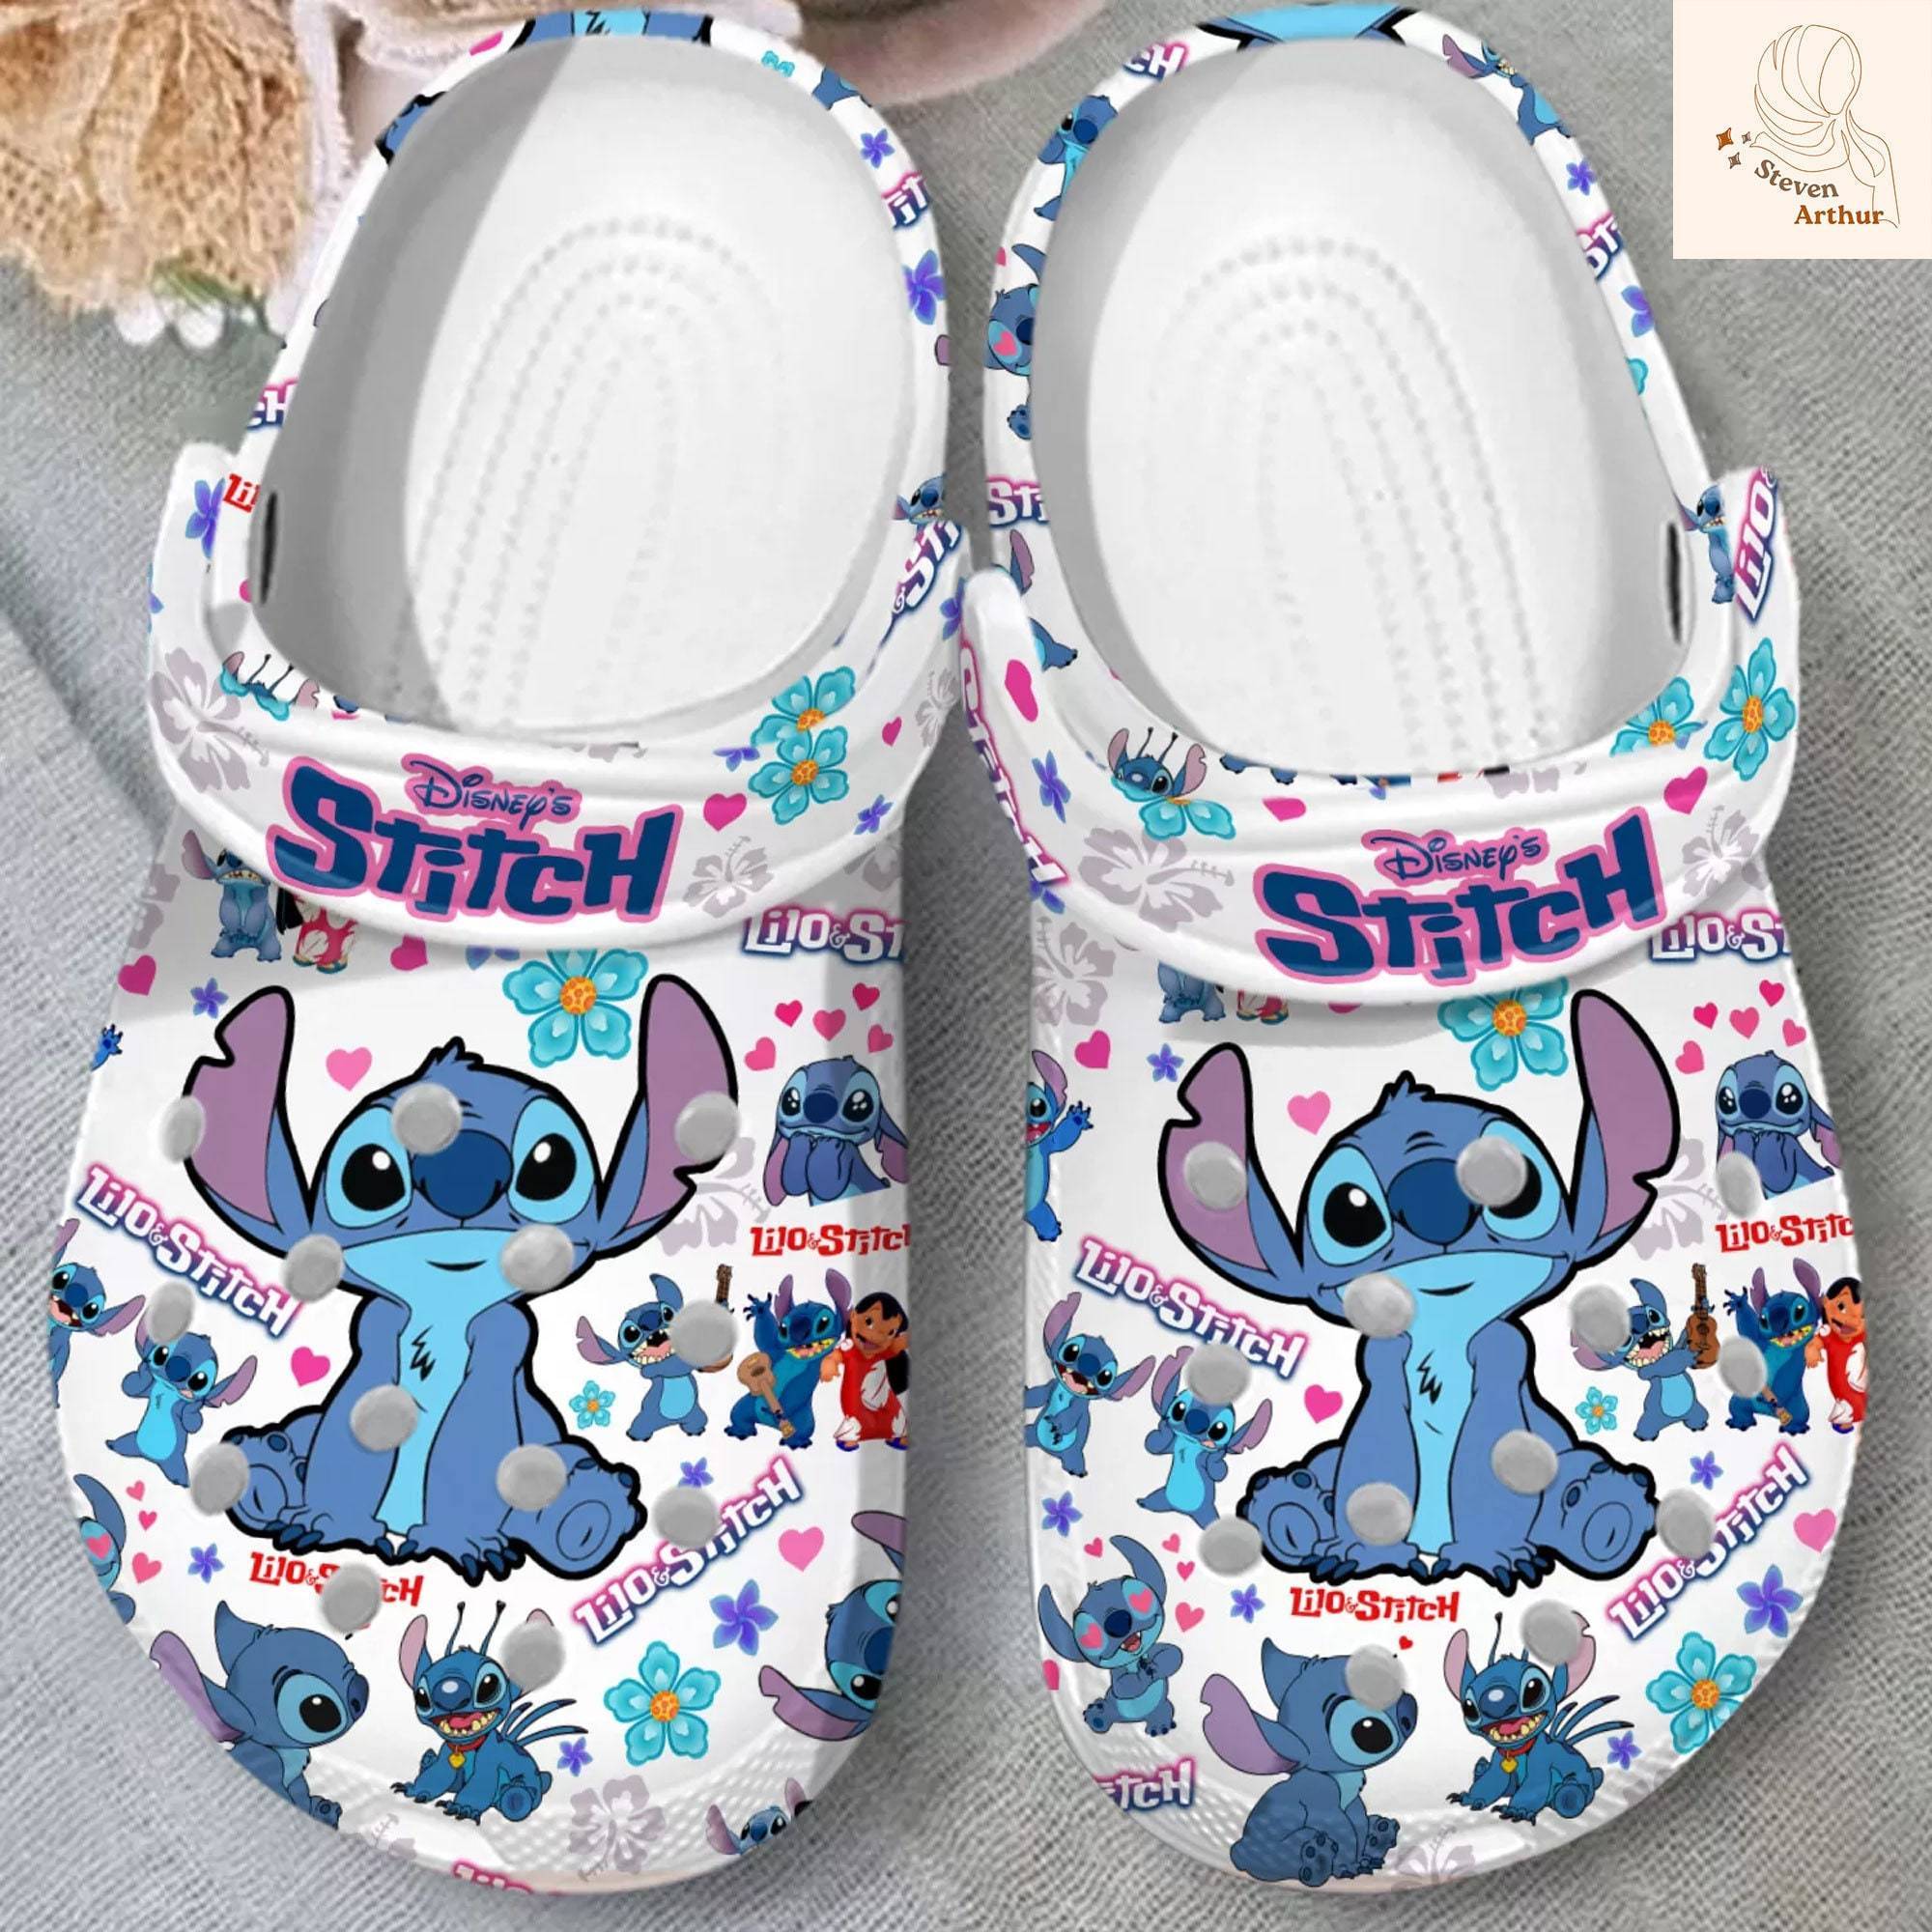 Lilo Stitch Comical Cartoon Themed Cozy Comfortable Disney Clogs